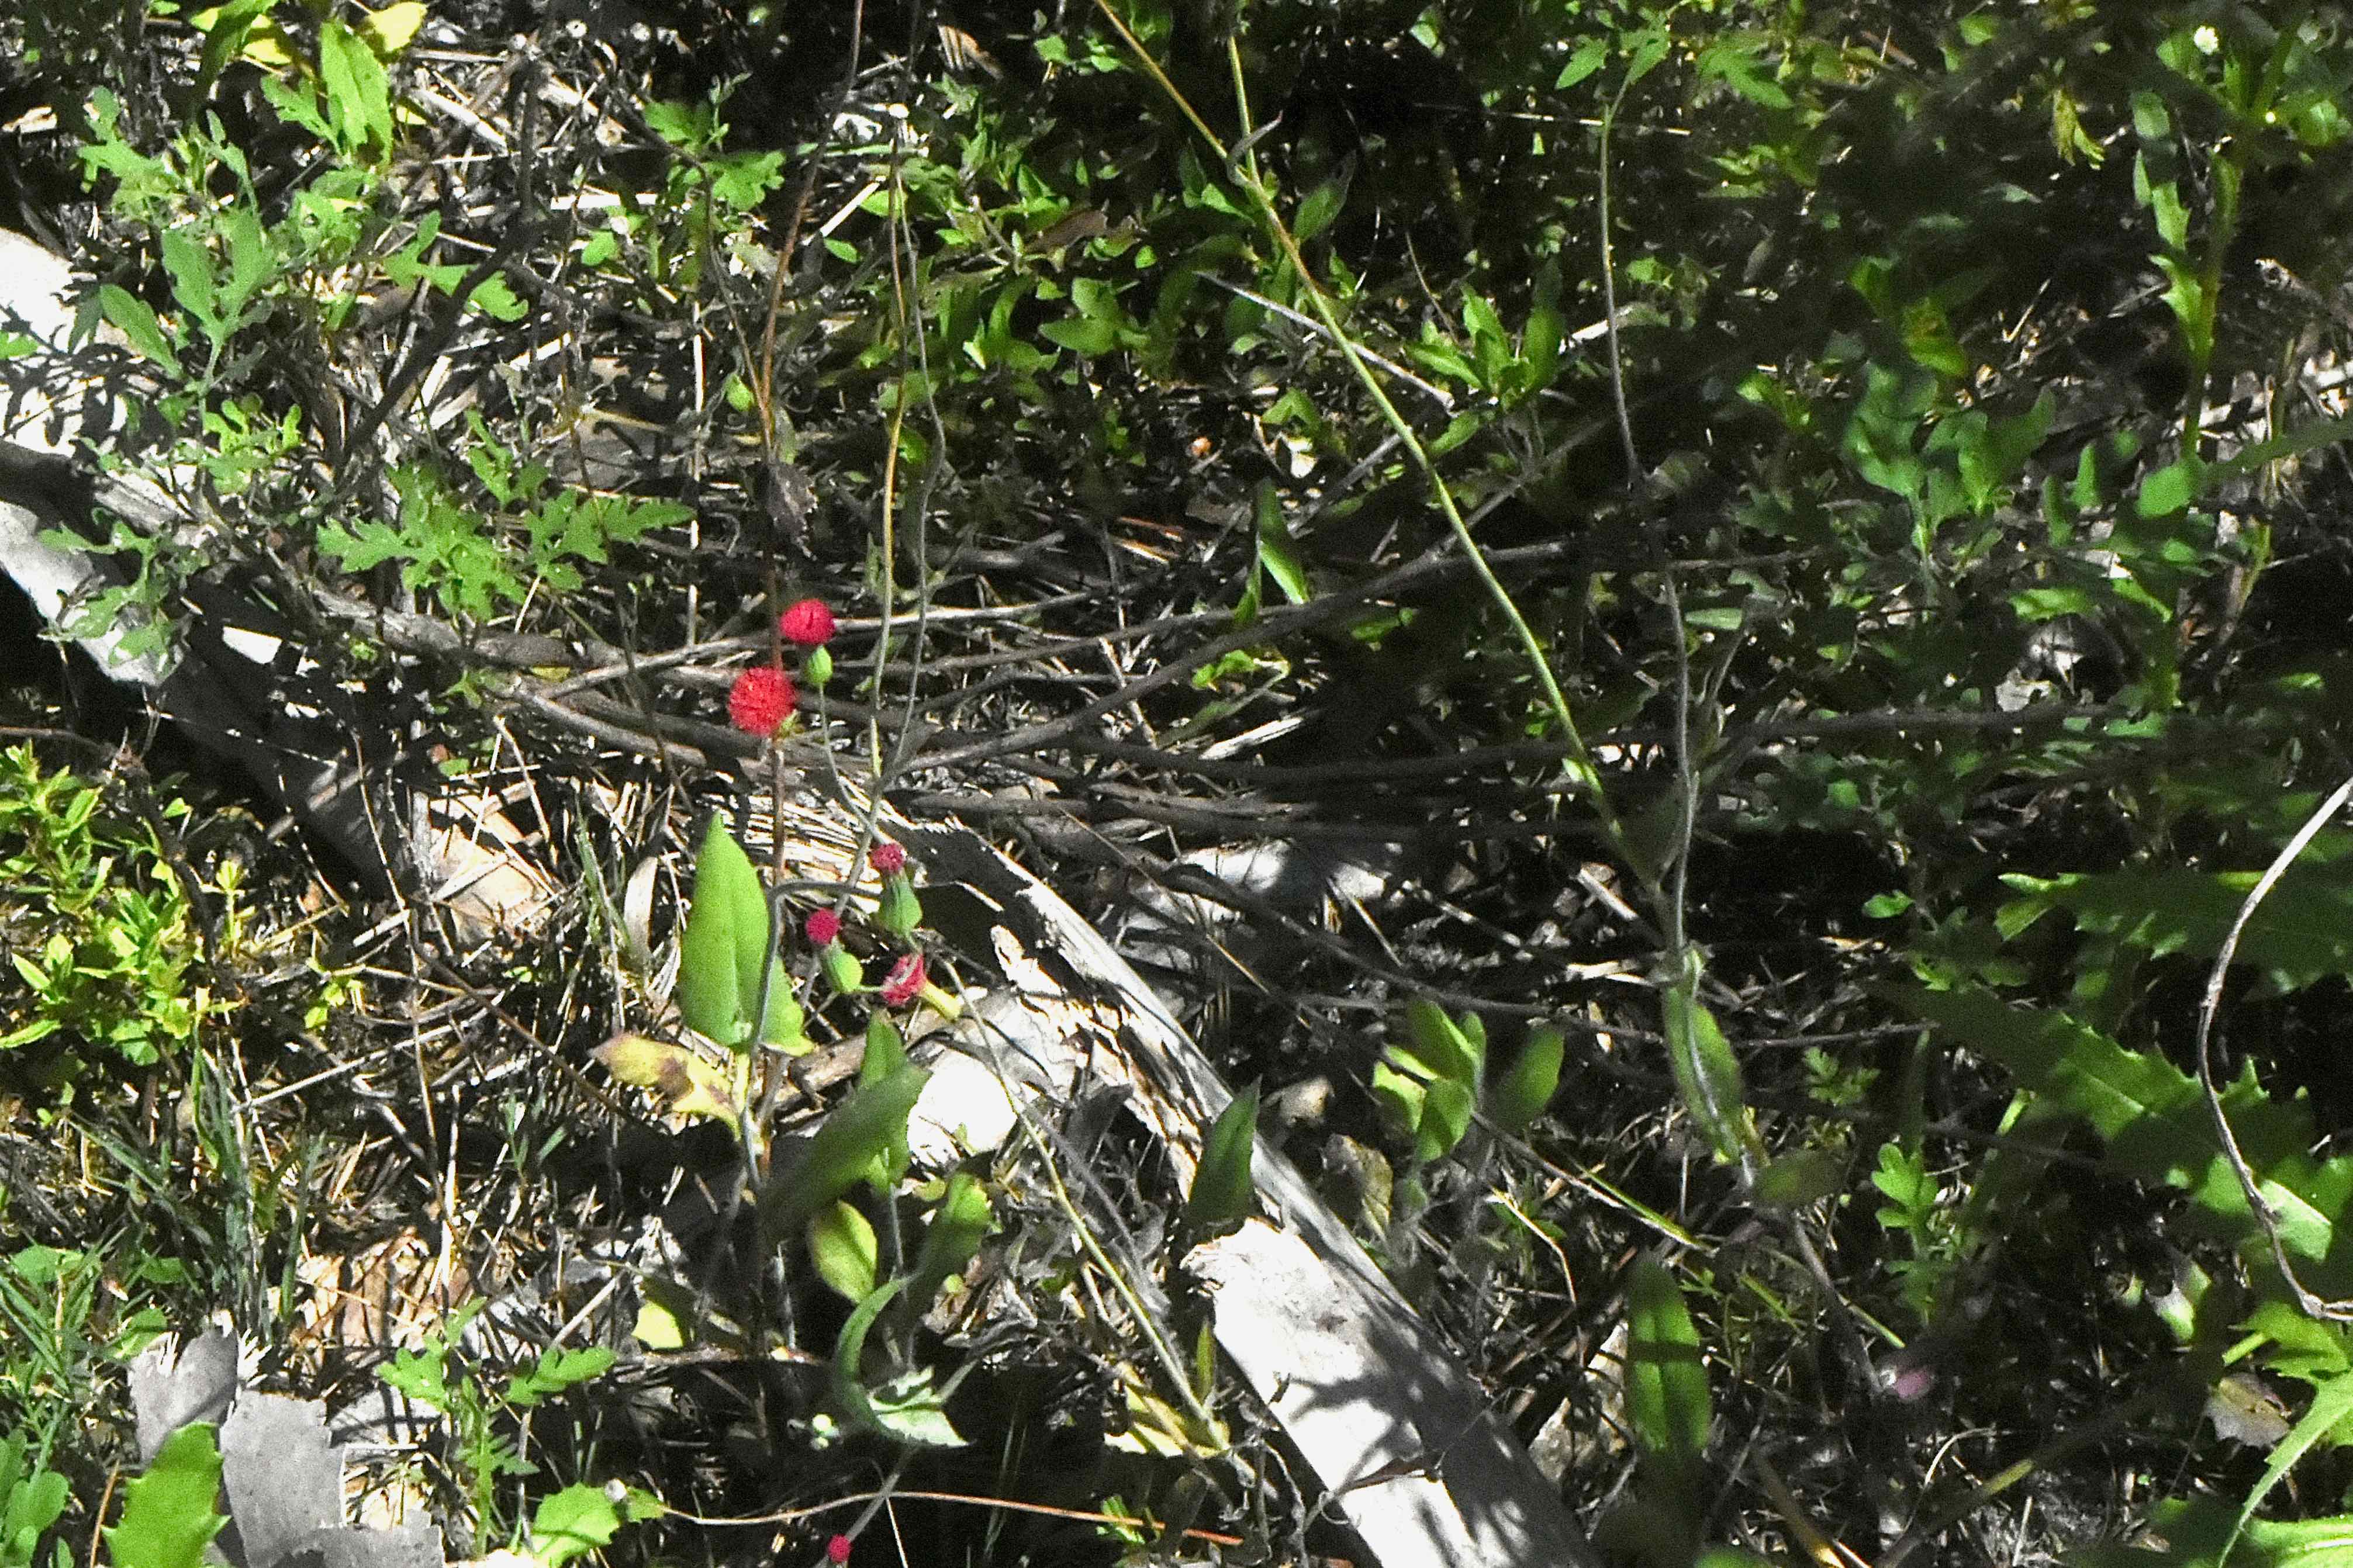 Florida red tasselflower